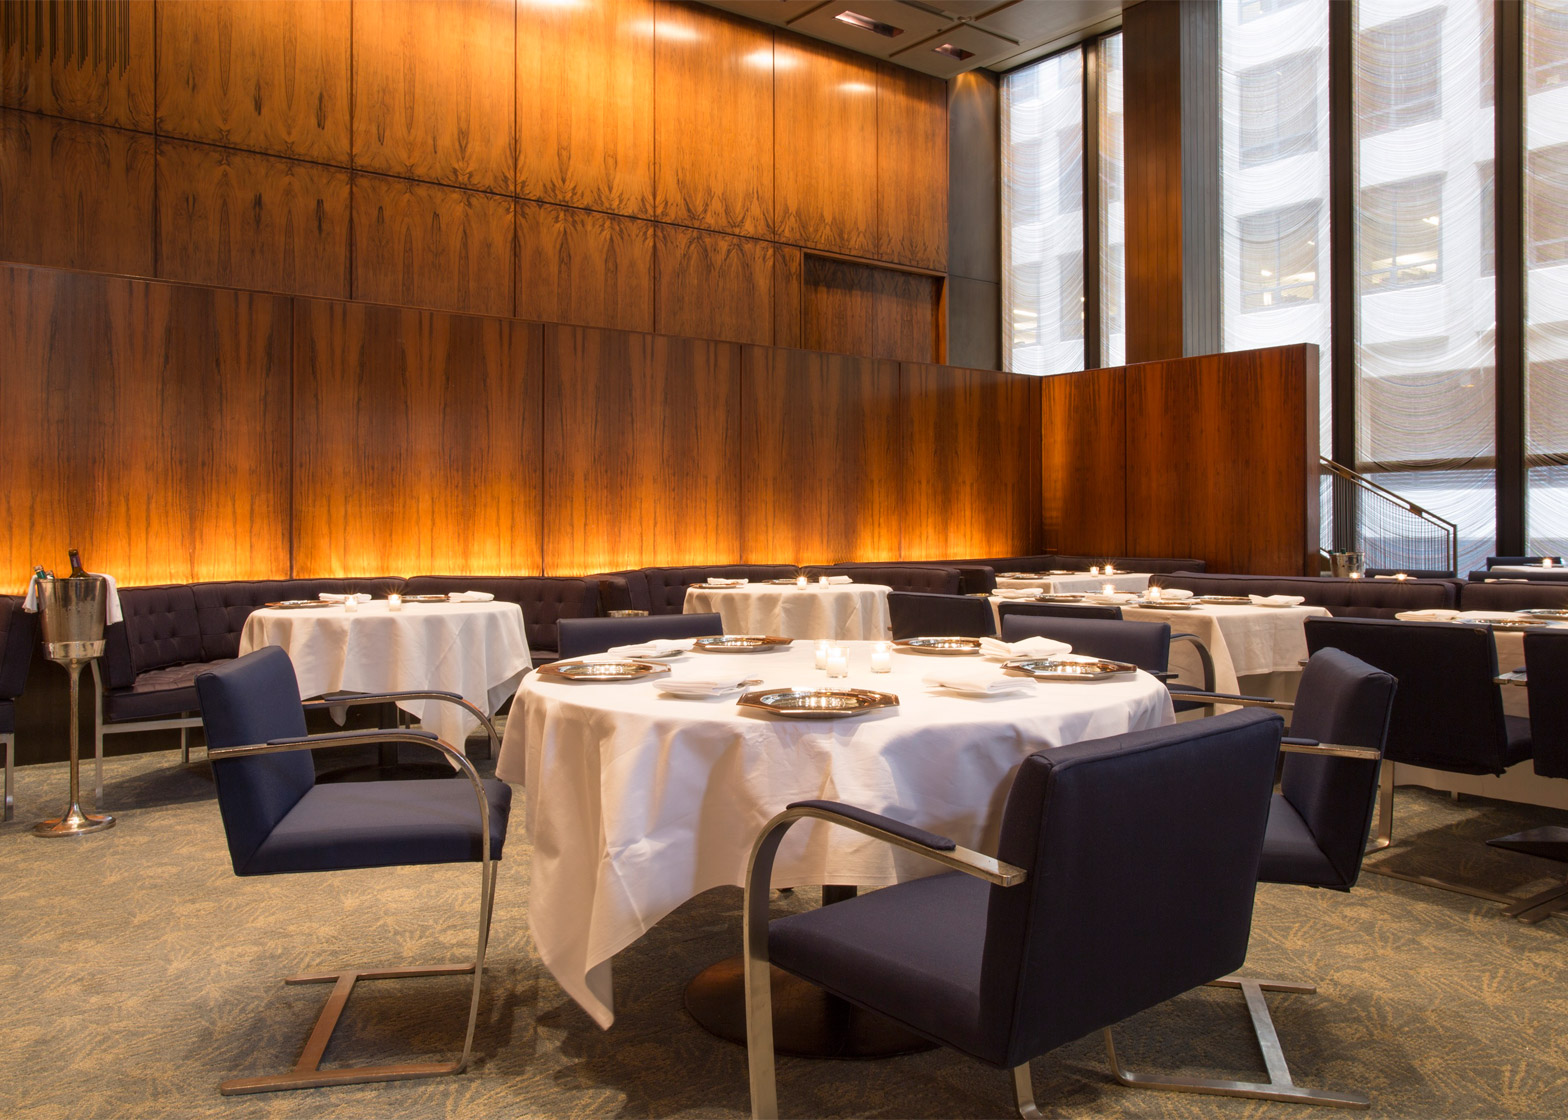 four-seasons-restaurant-interior-seagram-building-philip-johnson-mies-van-der-rohe-auction-new-york-city-usa-news_dezeen_1568_5